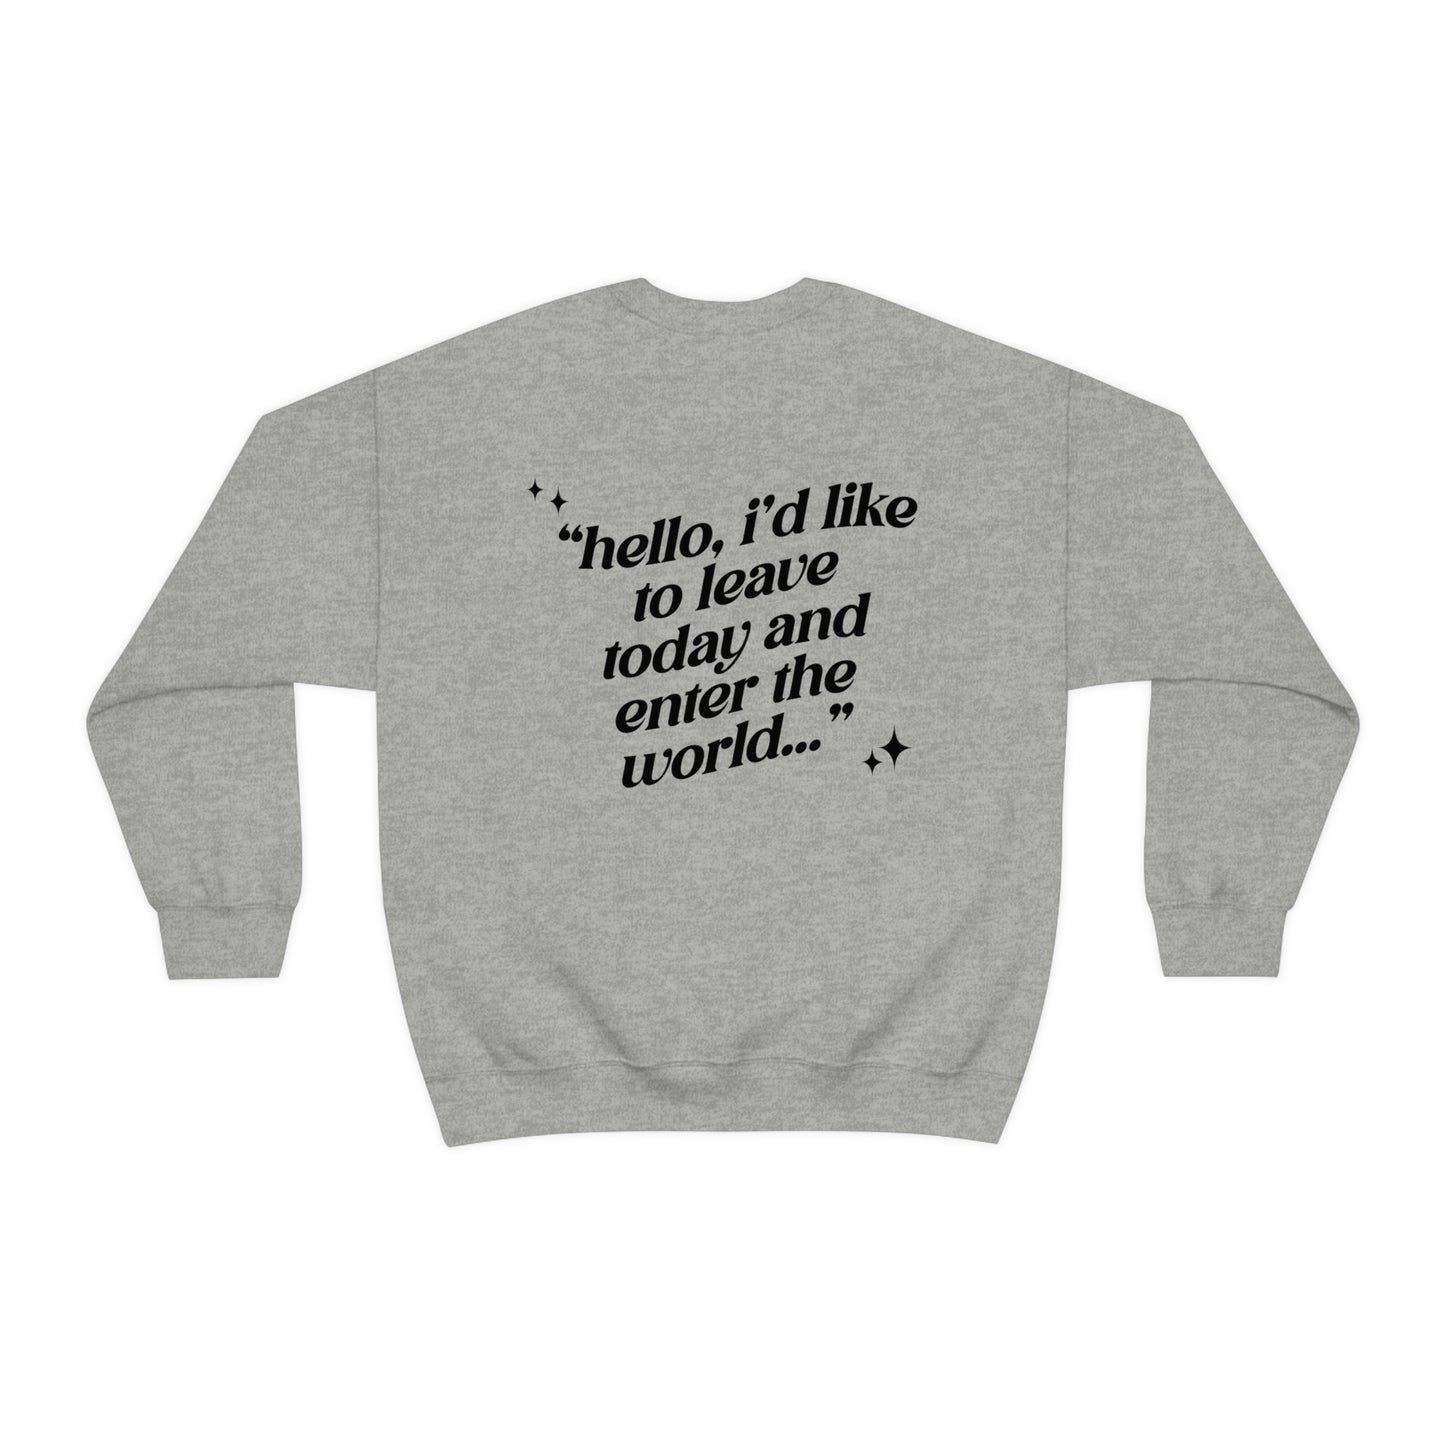 Magic is Calling - Adult Crewneck Sweatshirt